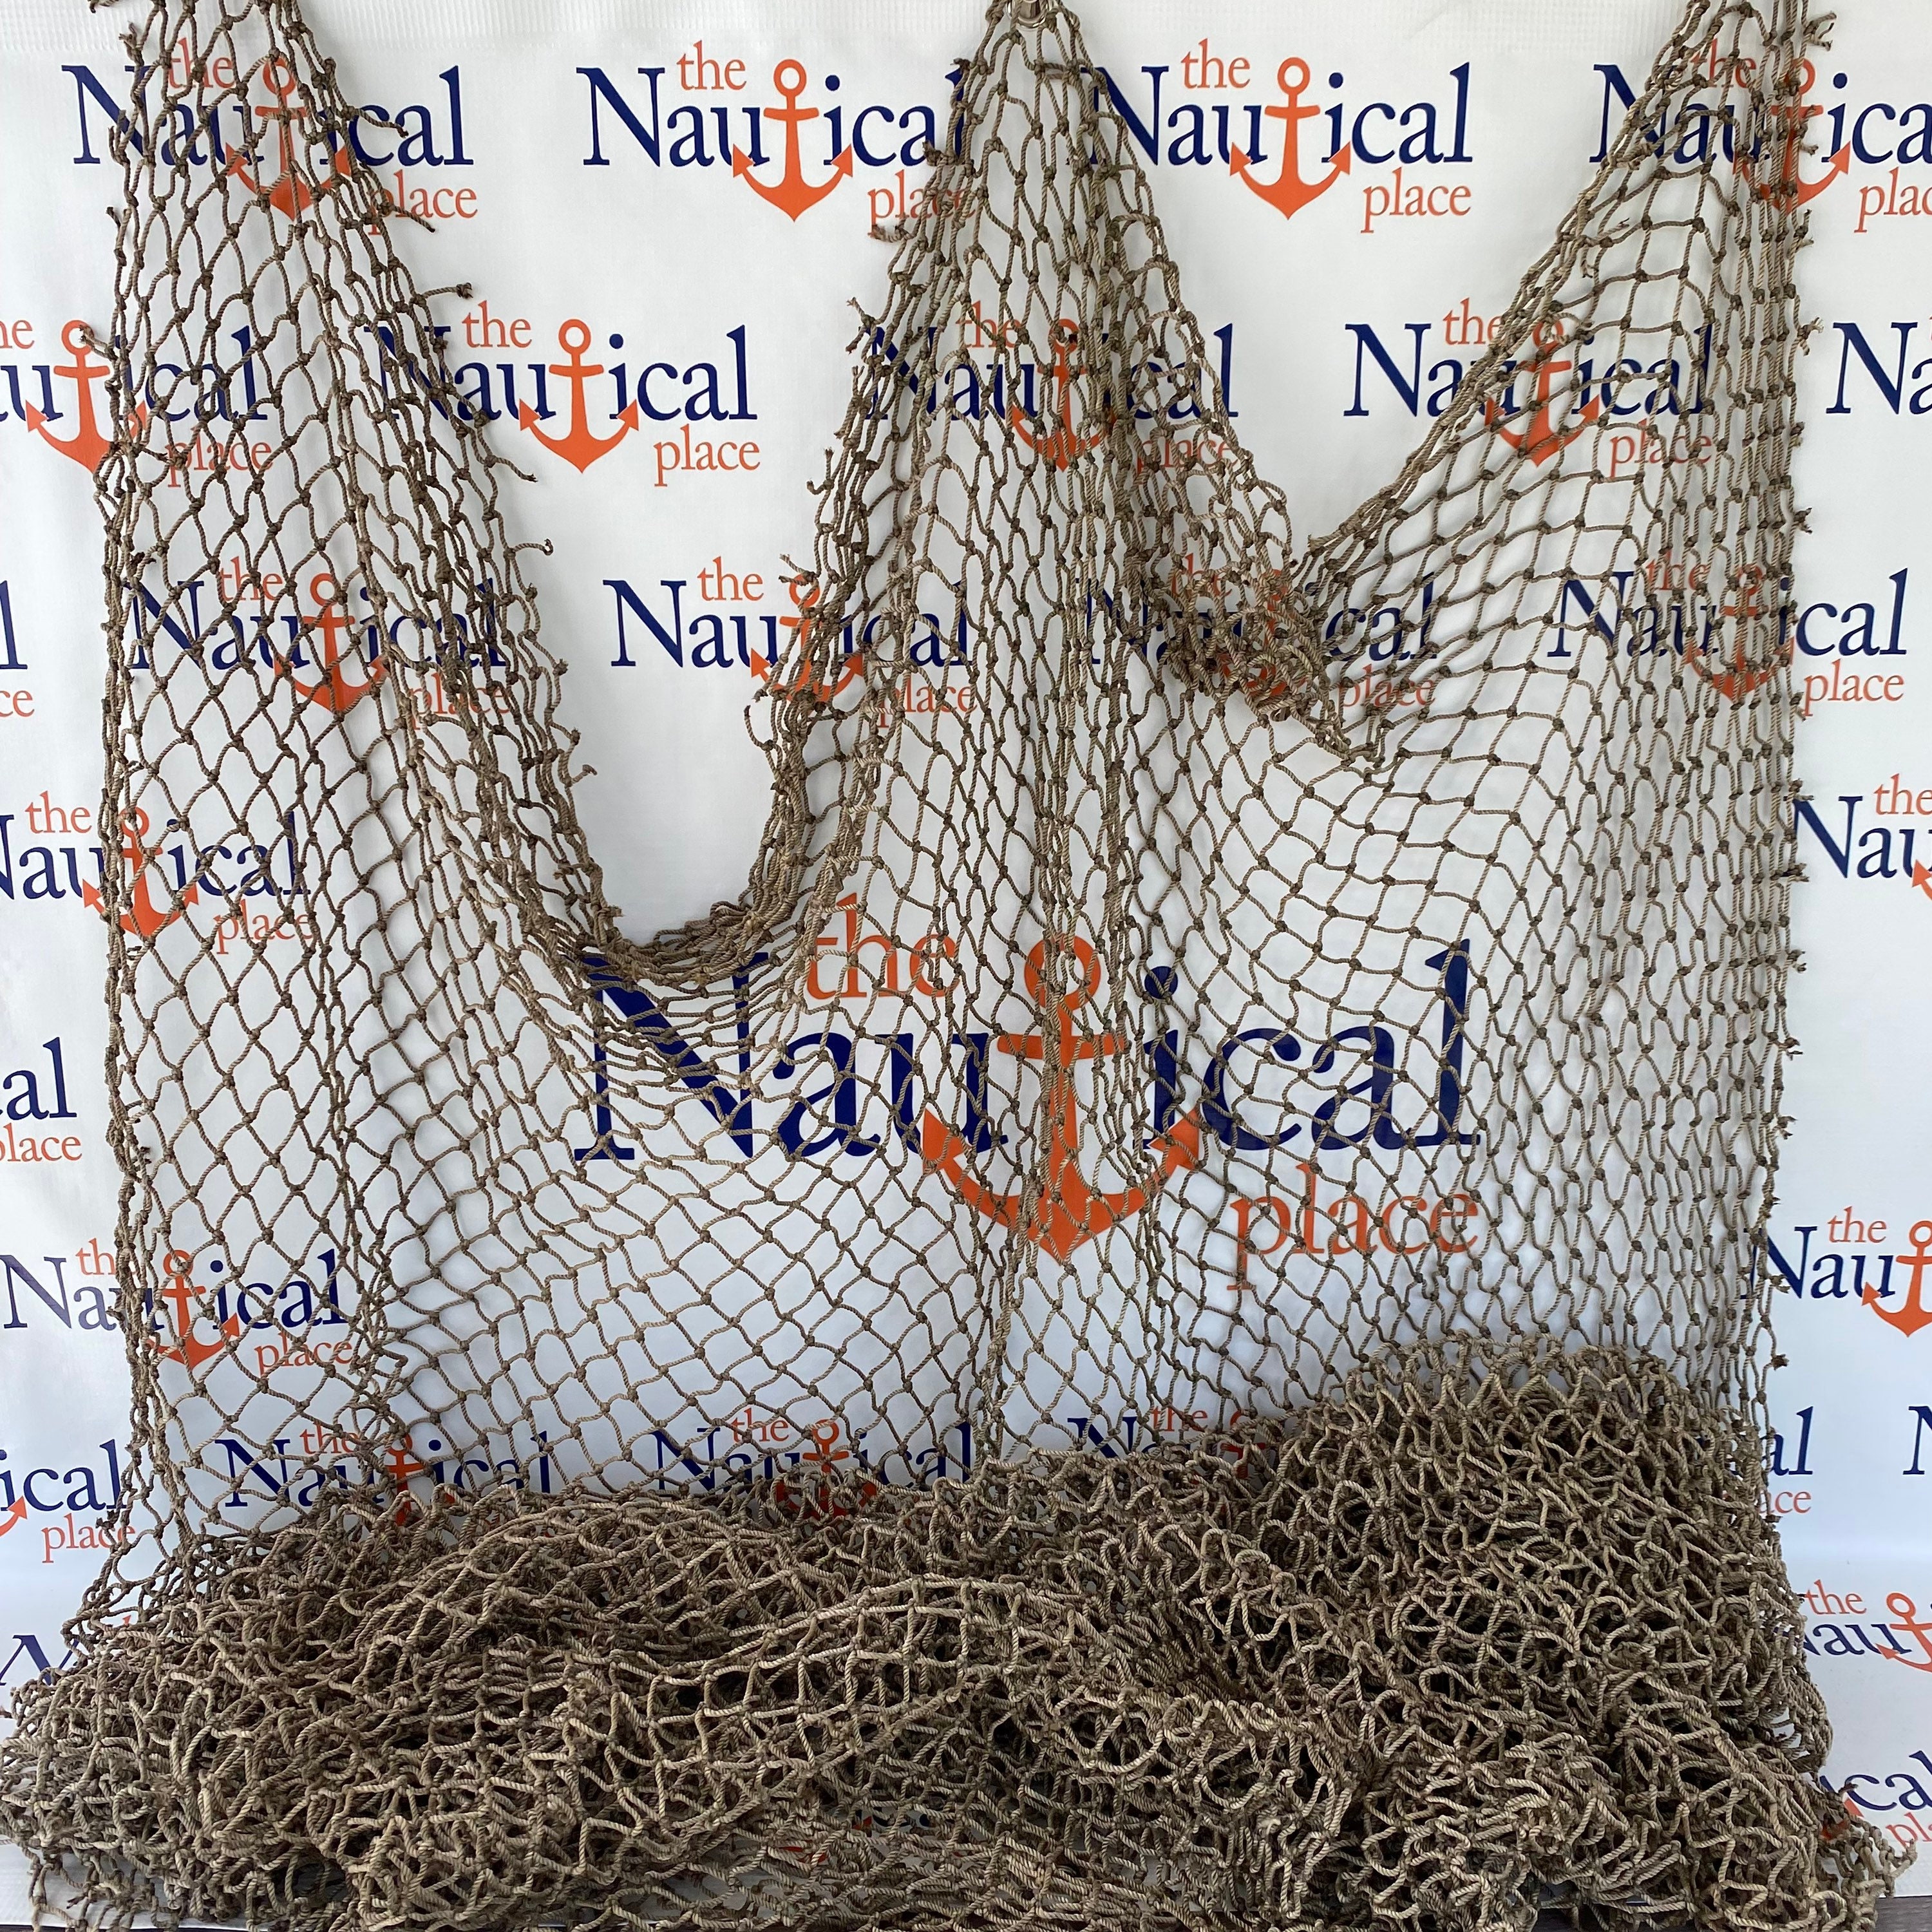 Weathered Marina Patio Fishing Nets Decor / Rope Floats 1 Assembly